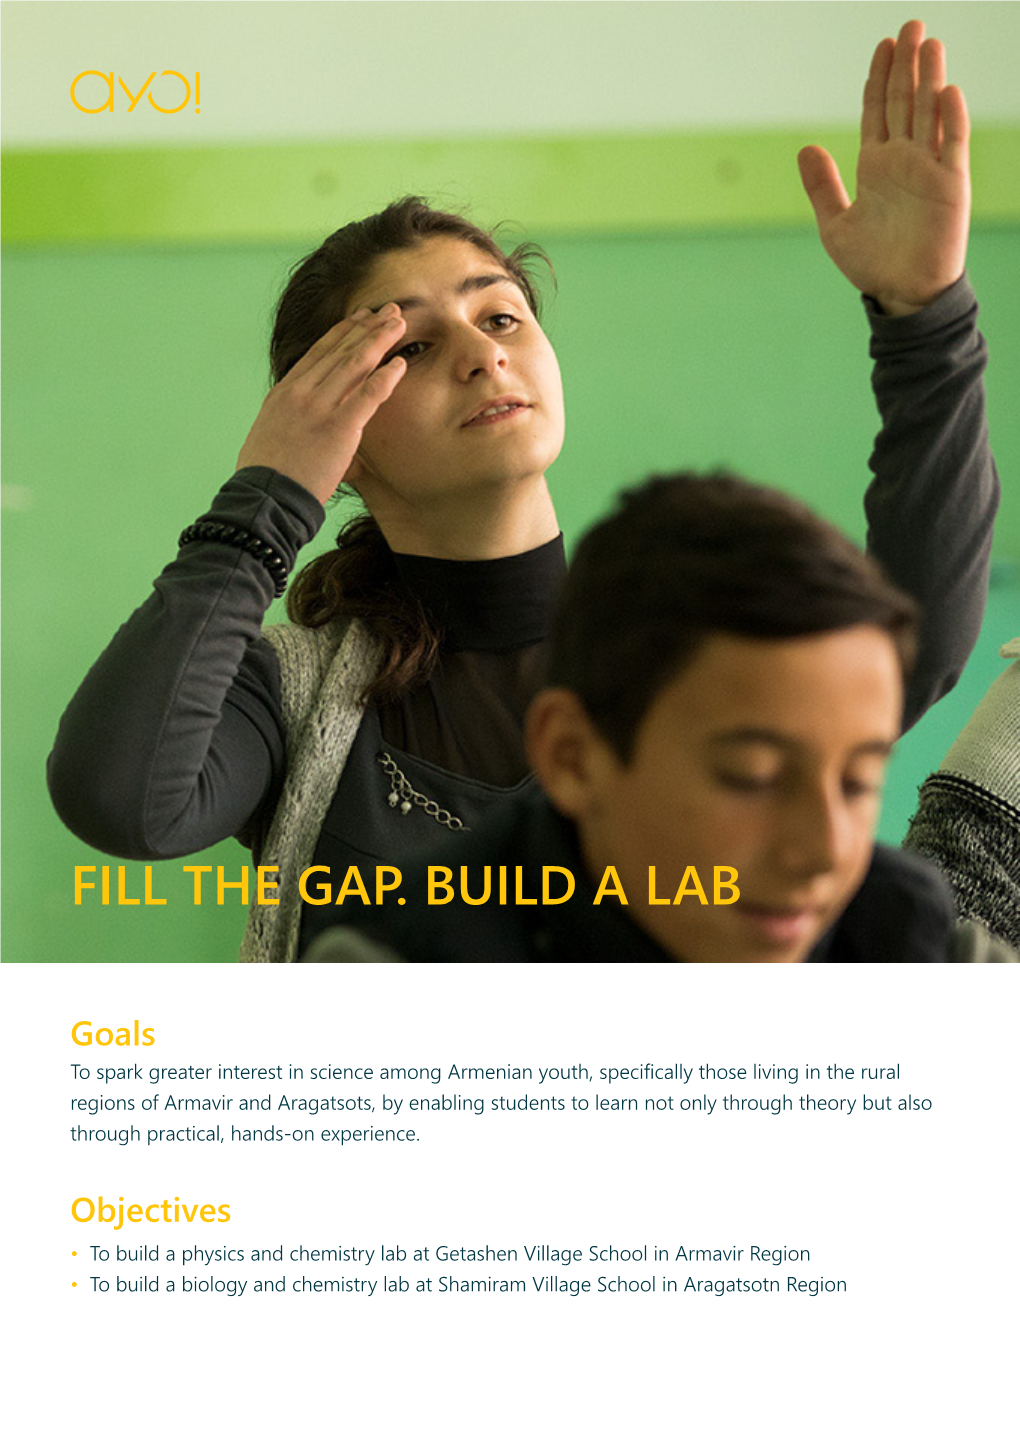 Fill the Gap. Build a Lab